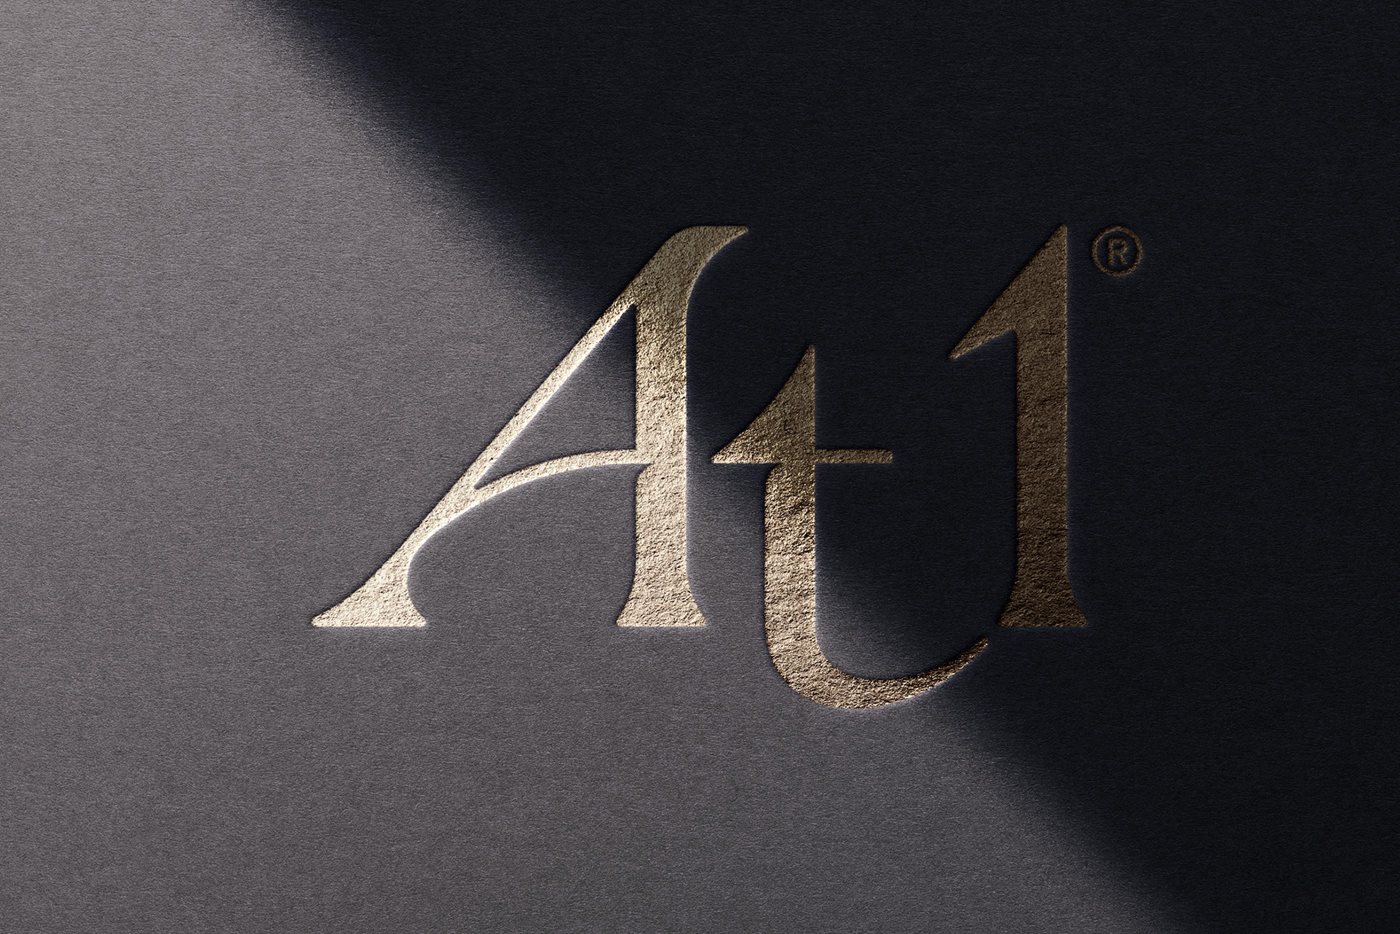 At1 logo in gold foil on a black background